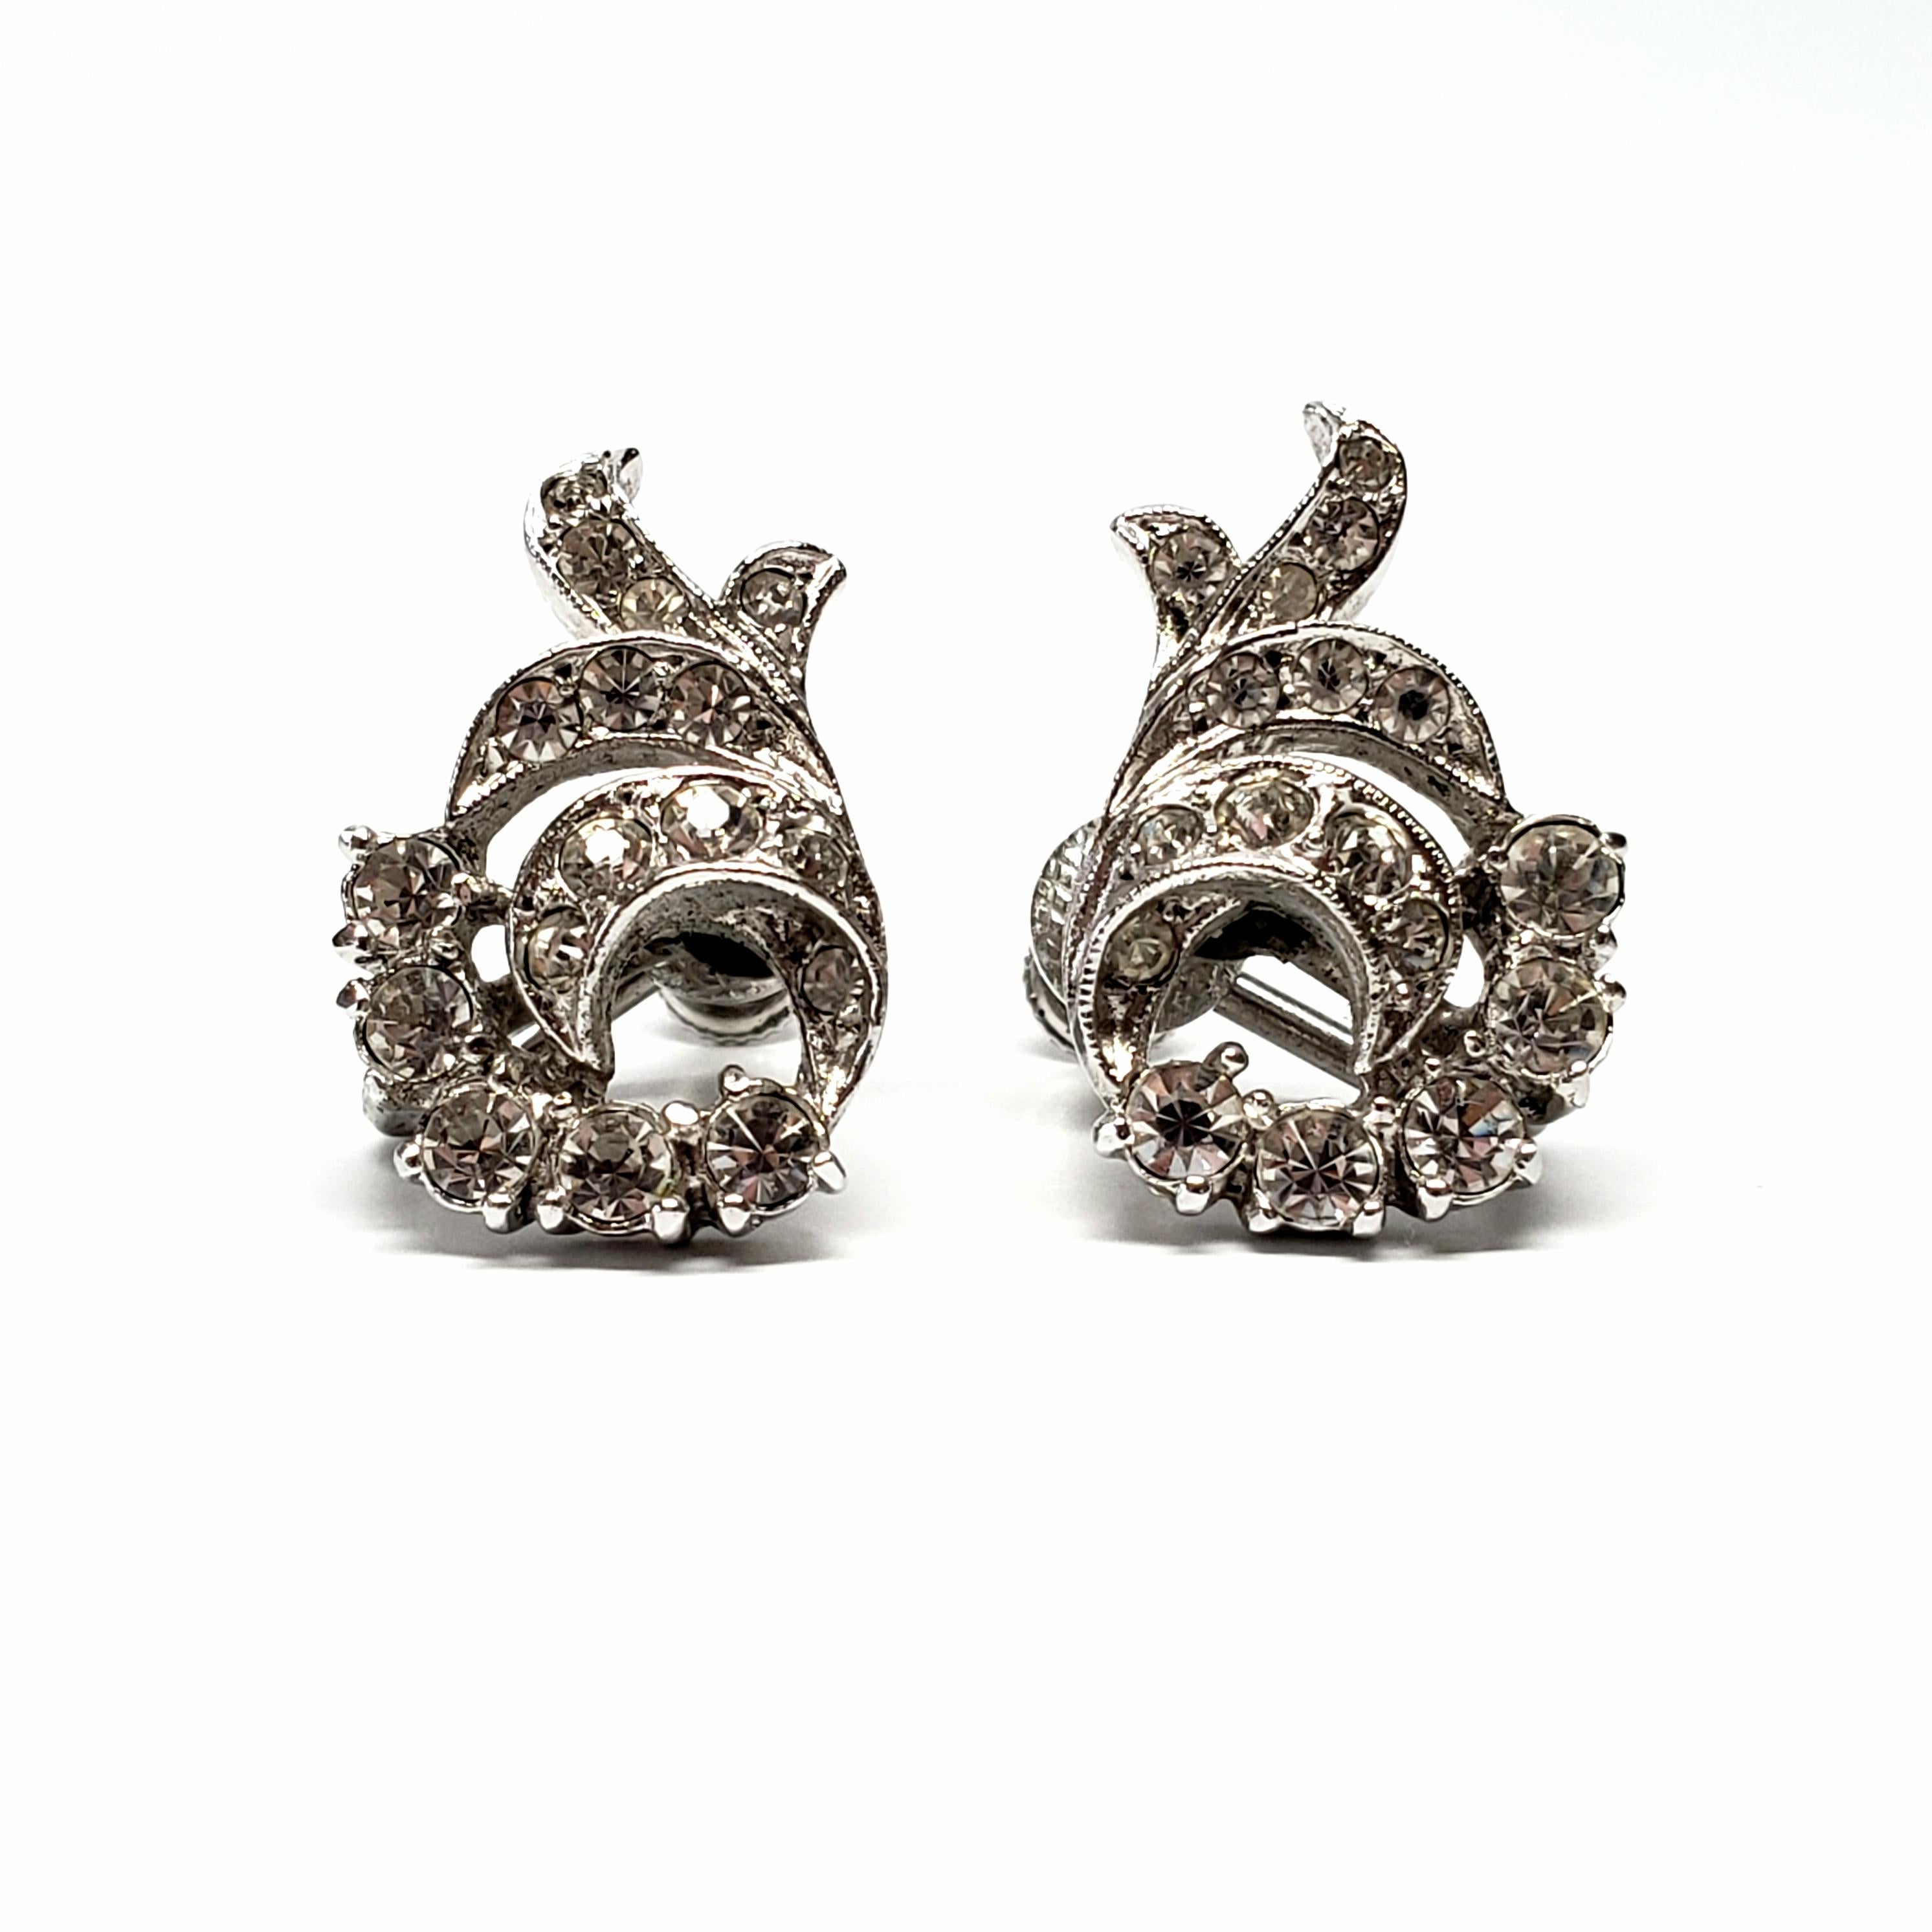 Engel Bros Sterling Silver Rhinestone Pendant and Earrings Set For Sale 1